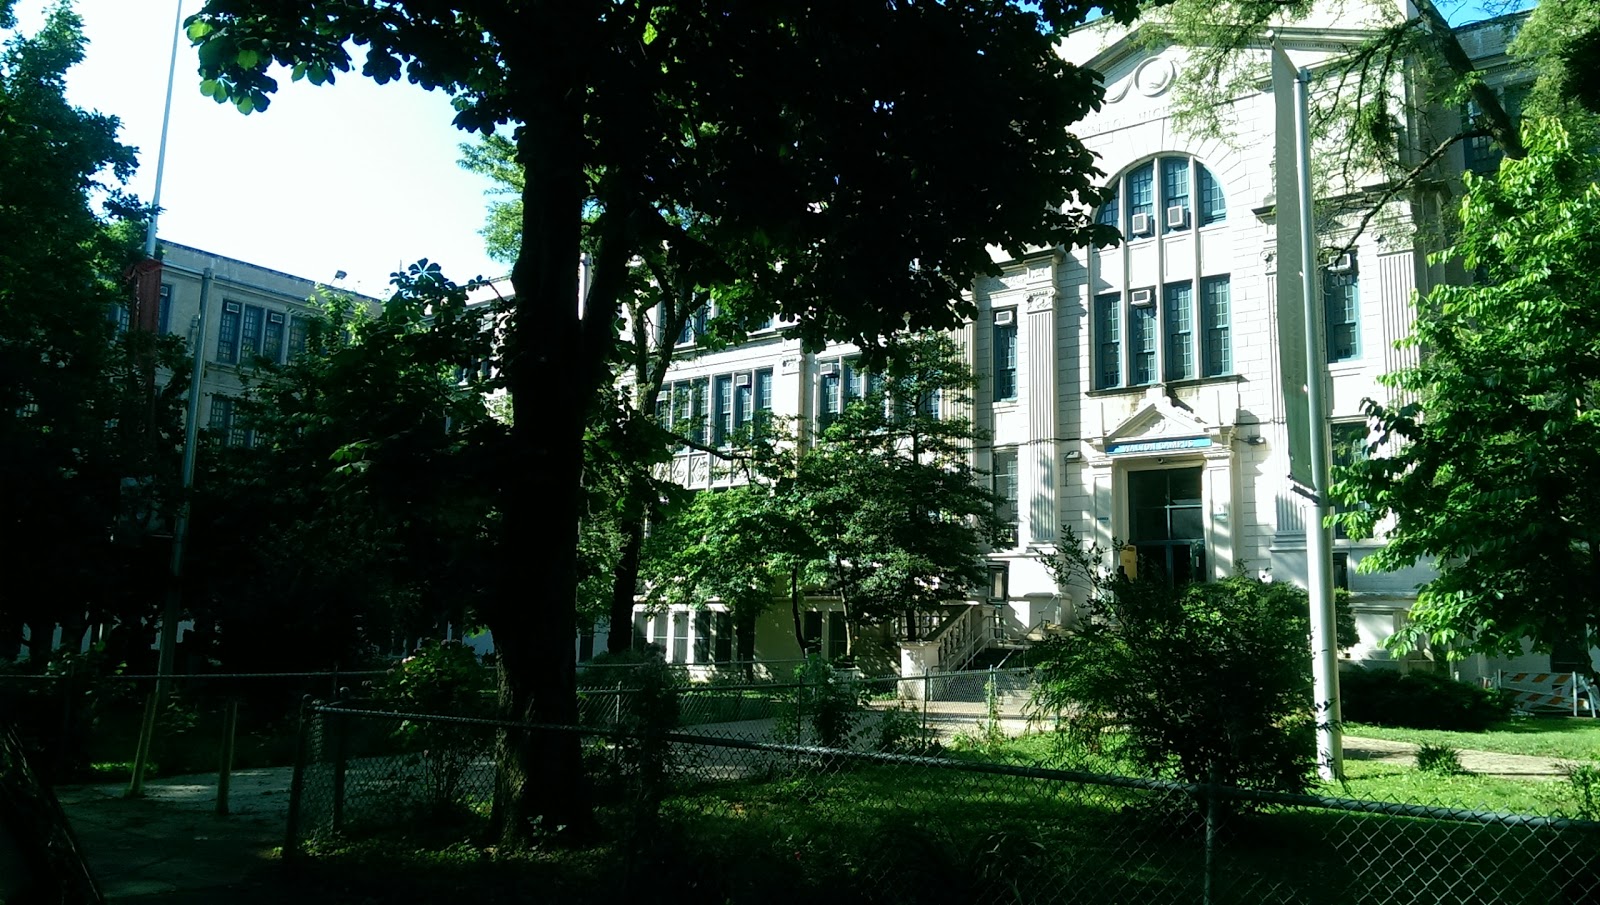 Photo of Celia Cruz Bronx High School of Music in Bronx City, New York, United States - 1 Picture of Point of interest, Establishment